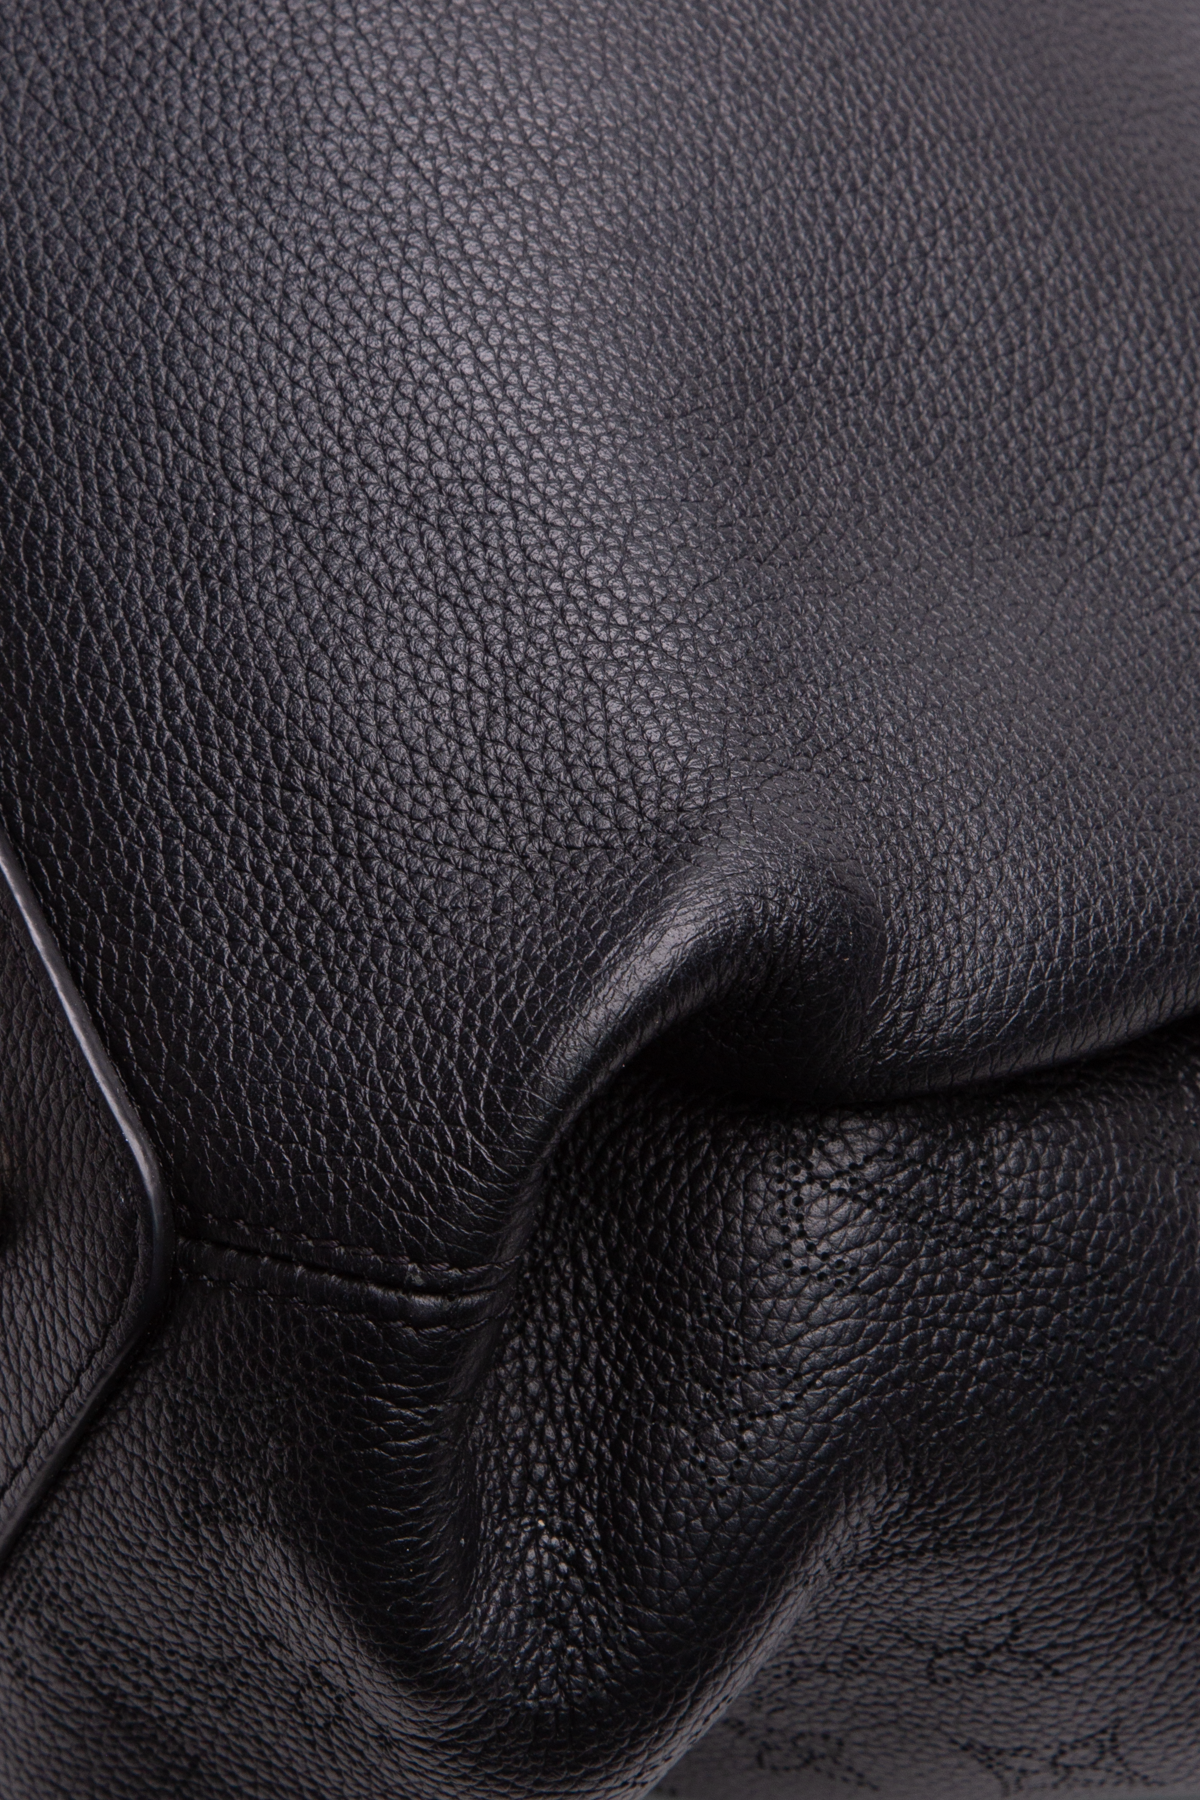 Louis Vuitton Haumea Tote Bag(Black)